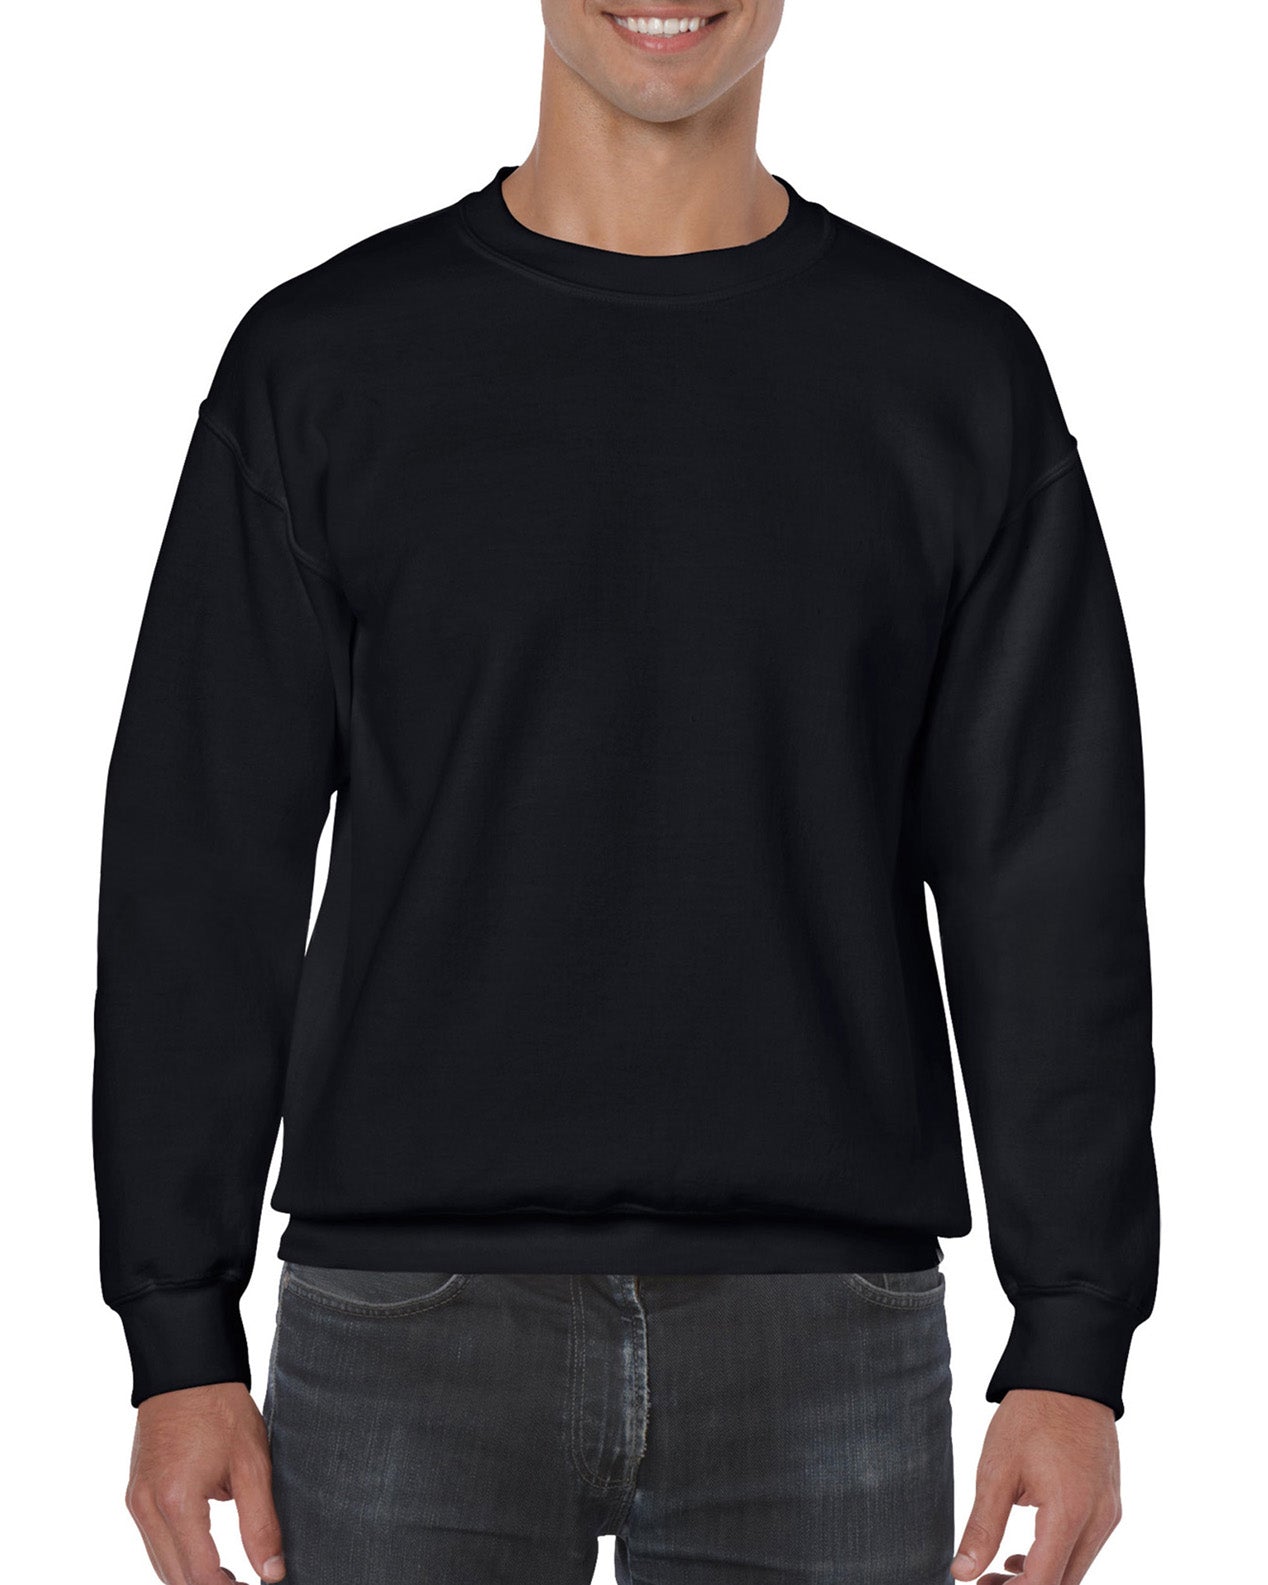 Adult Crewneck Sweatshirt - otkworld